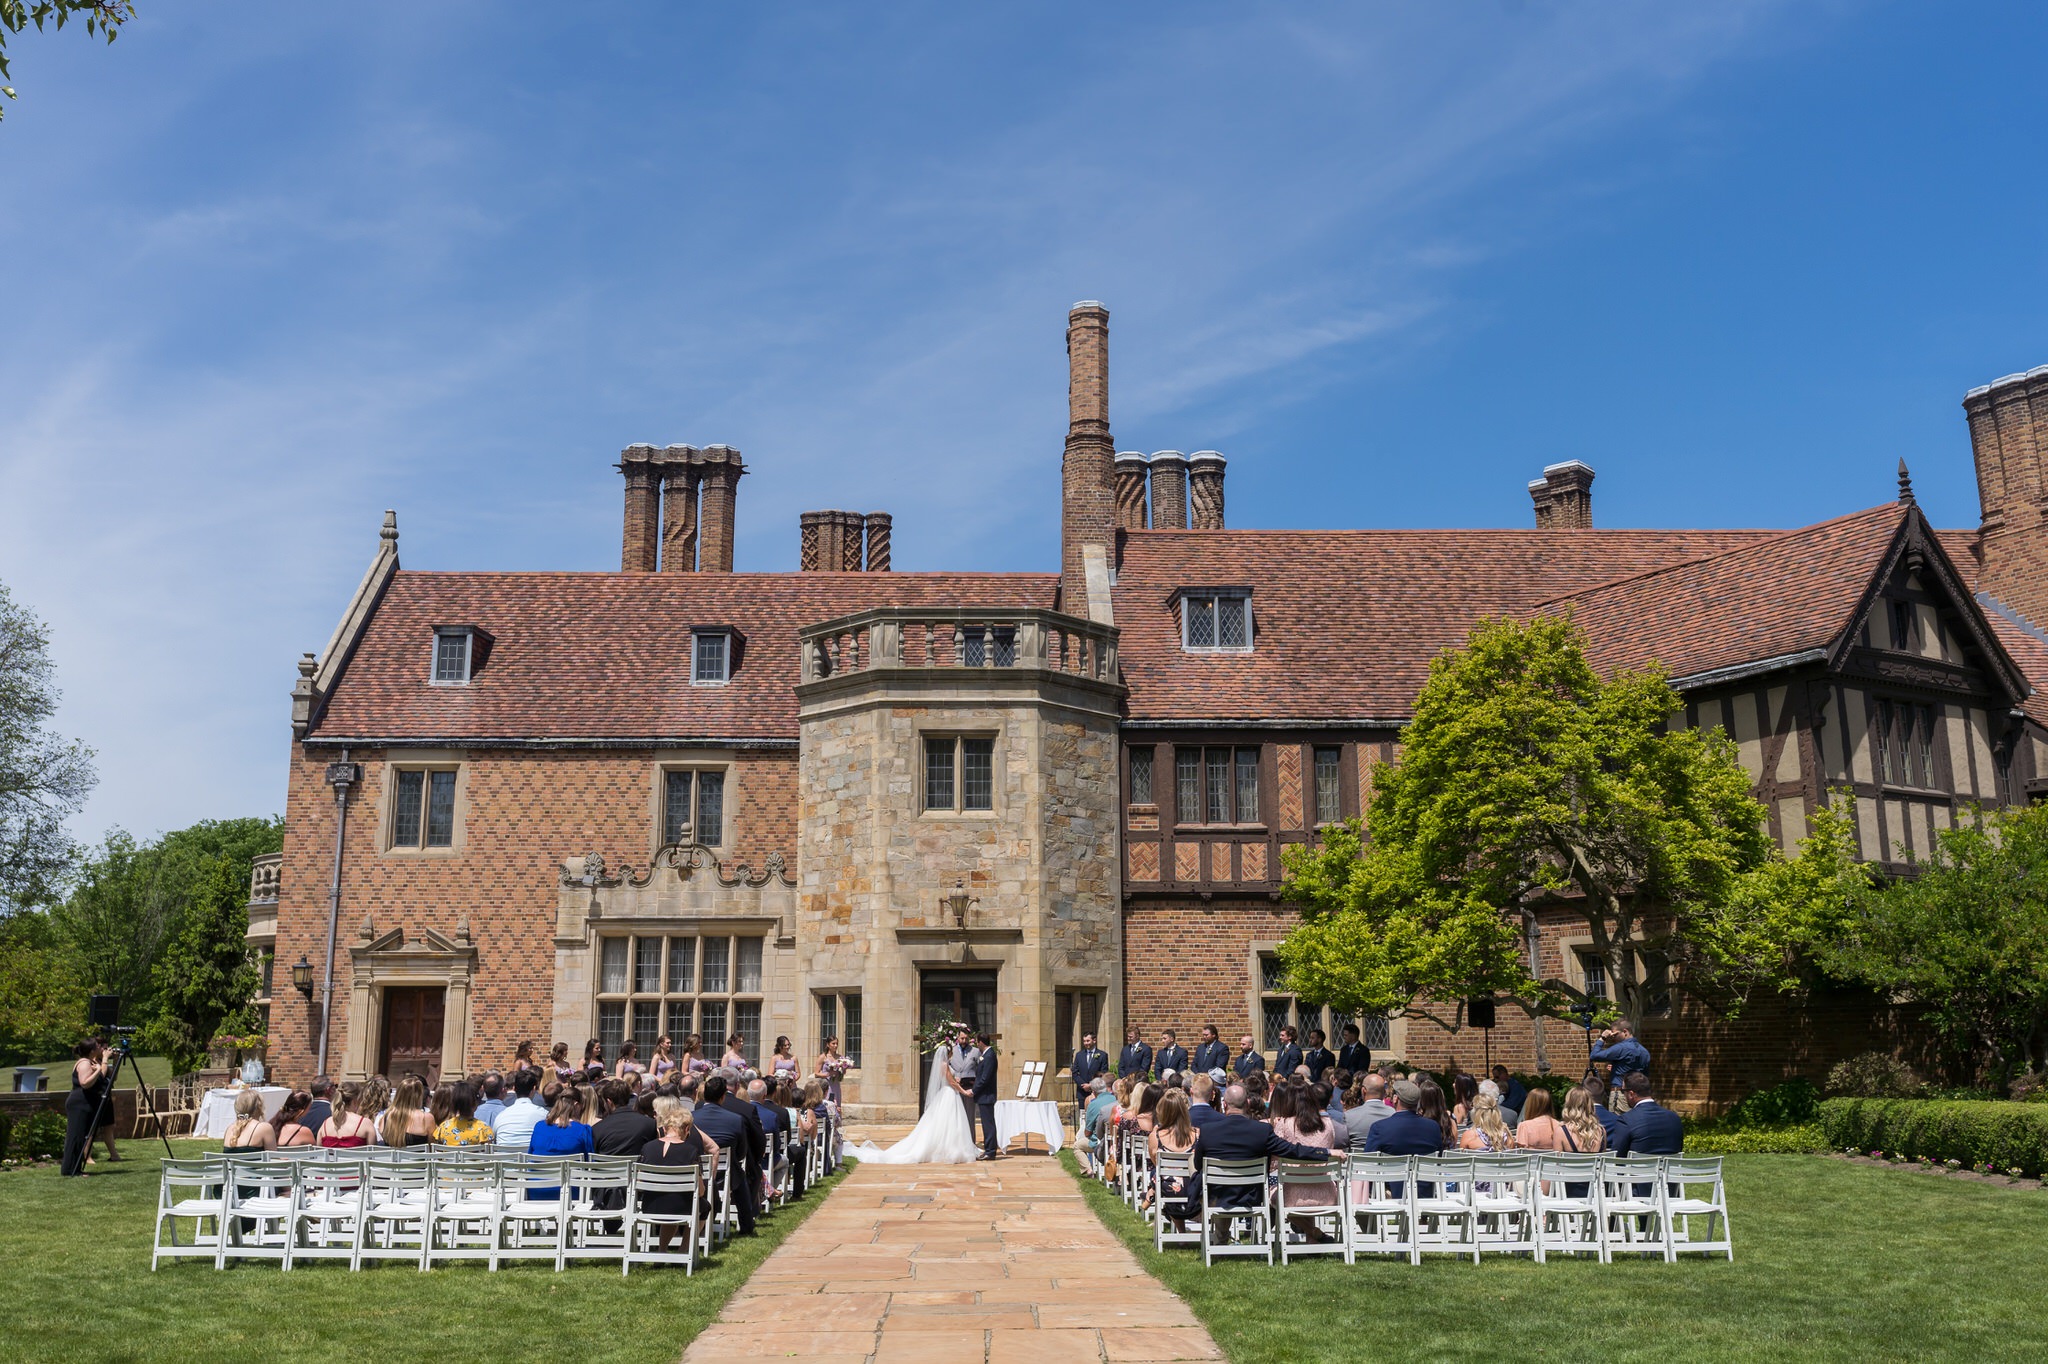 A wedding at Meadowbrook Hall in the Pegasus garden.